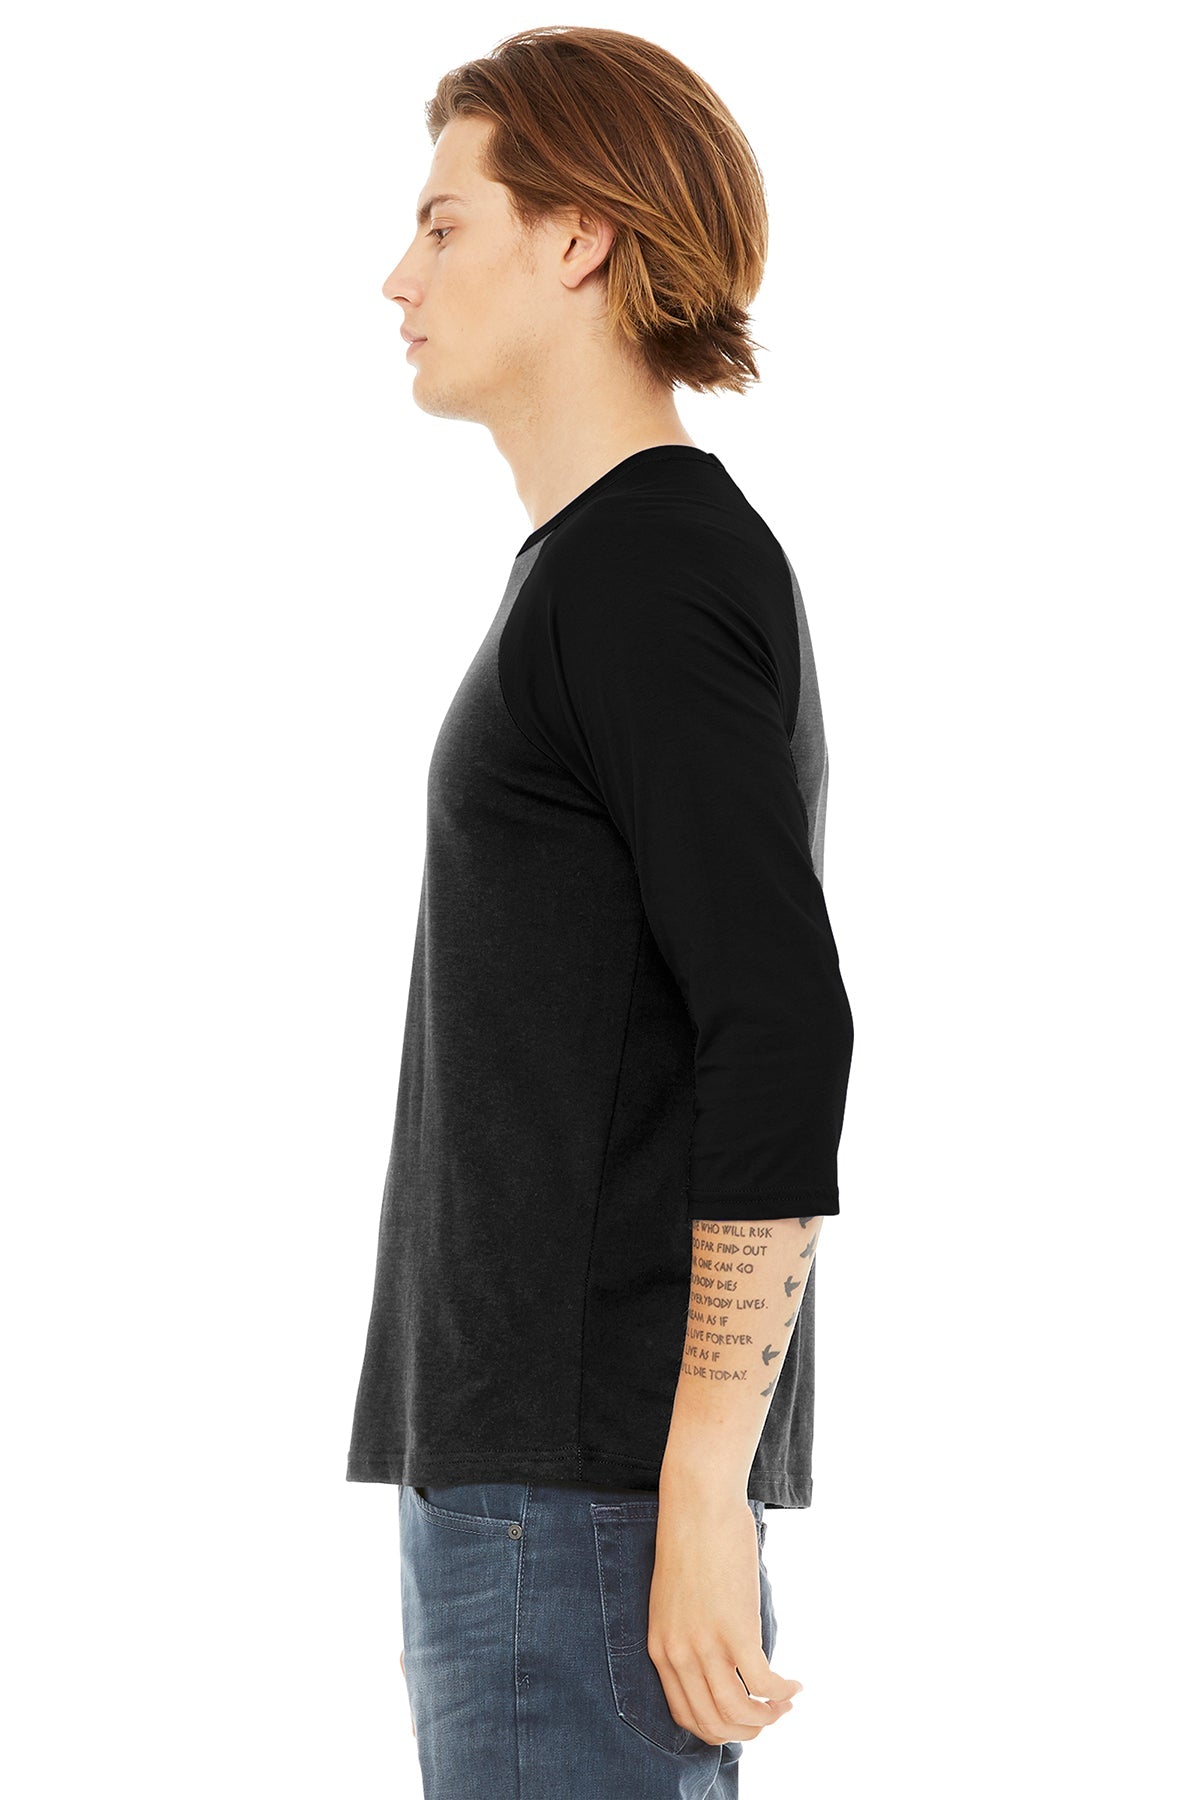 Bella Canvas Unisex 3/4-Sleeve Baseball T-Shirt, Black/ Black